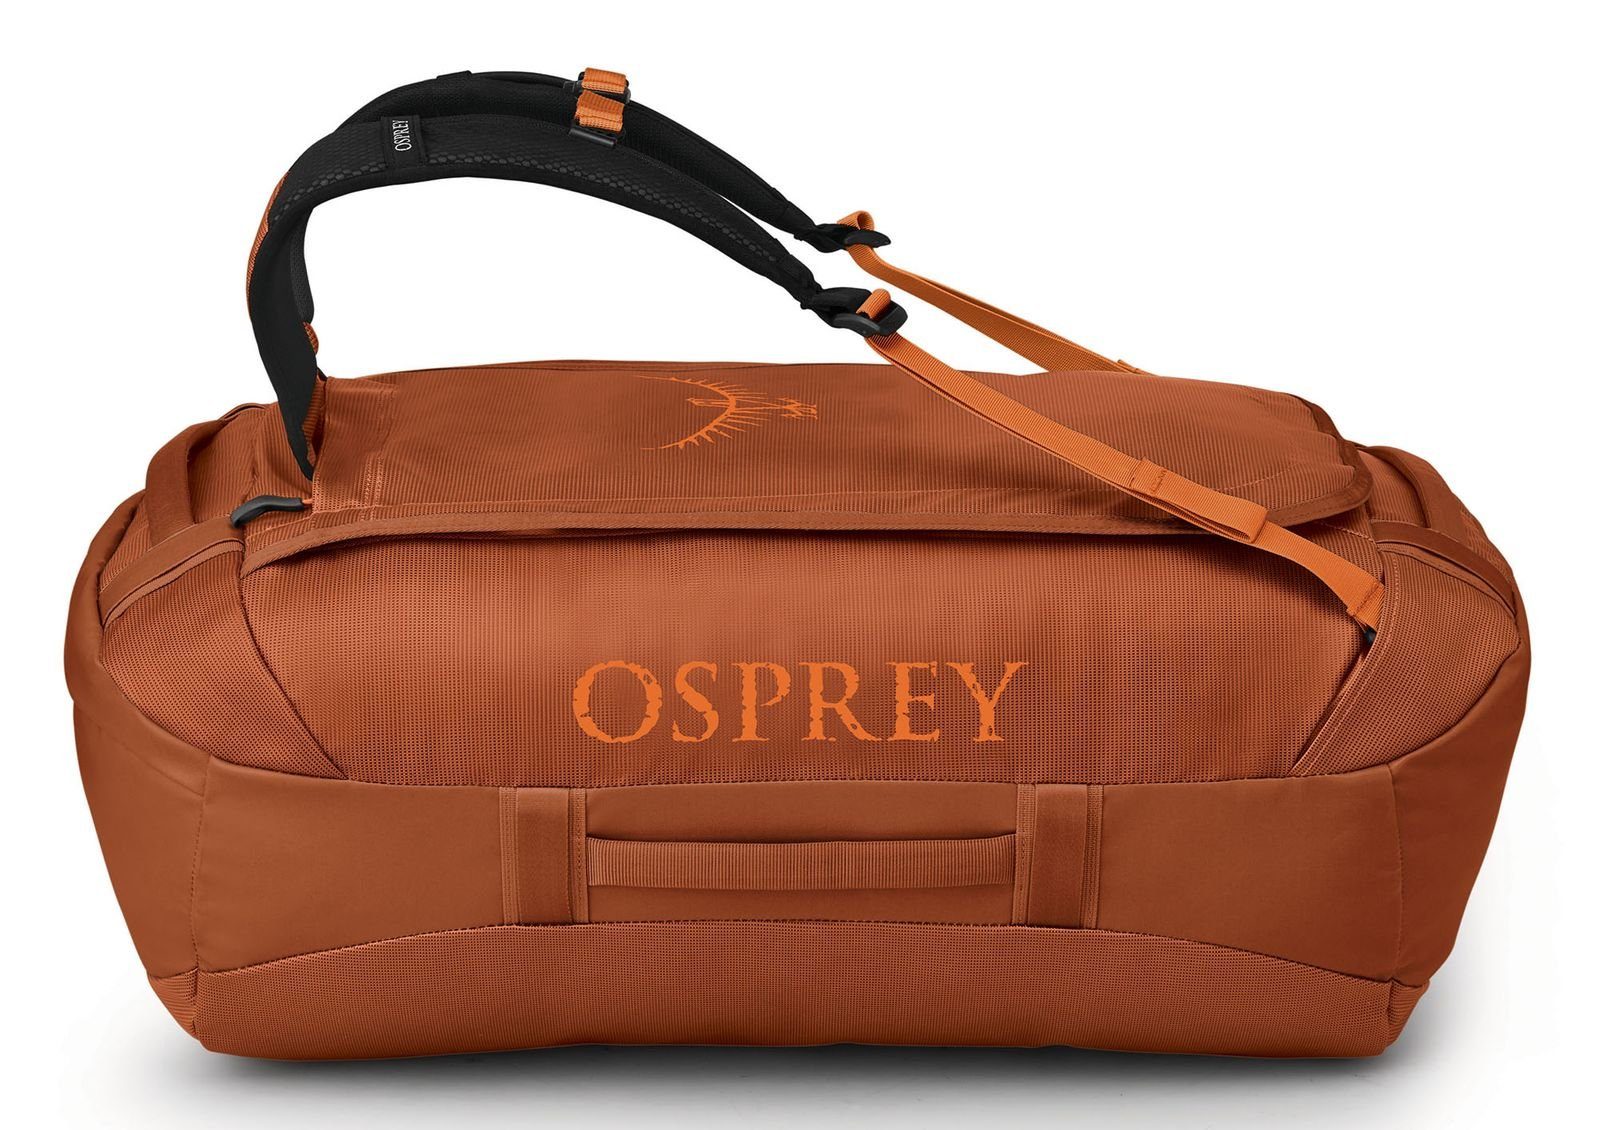 Osprey Rucksack Orange Dawn